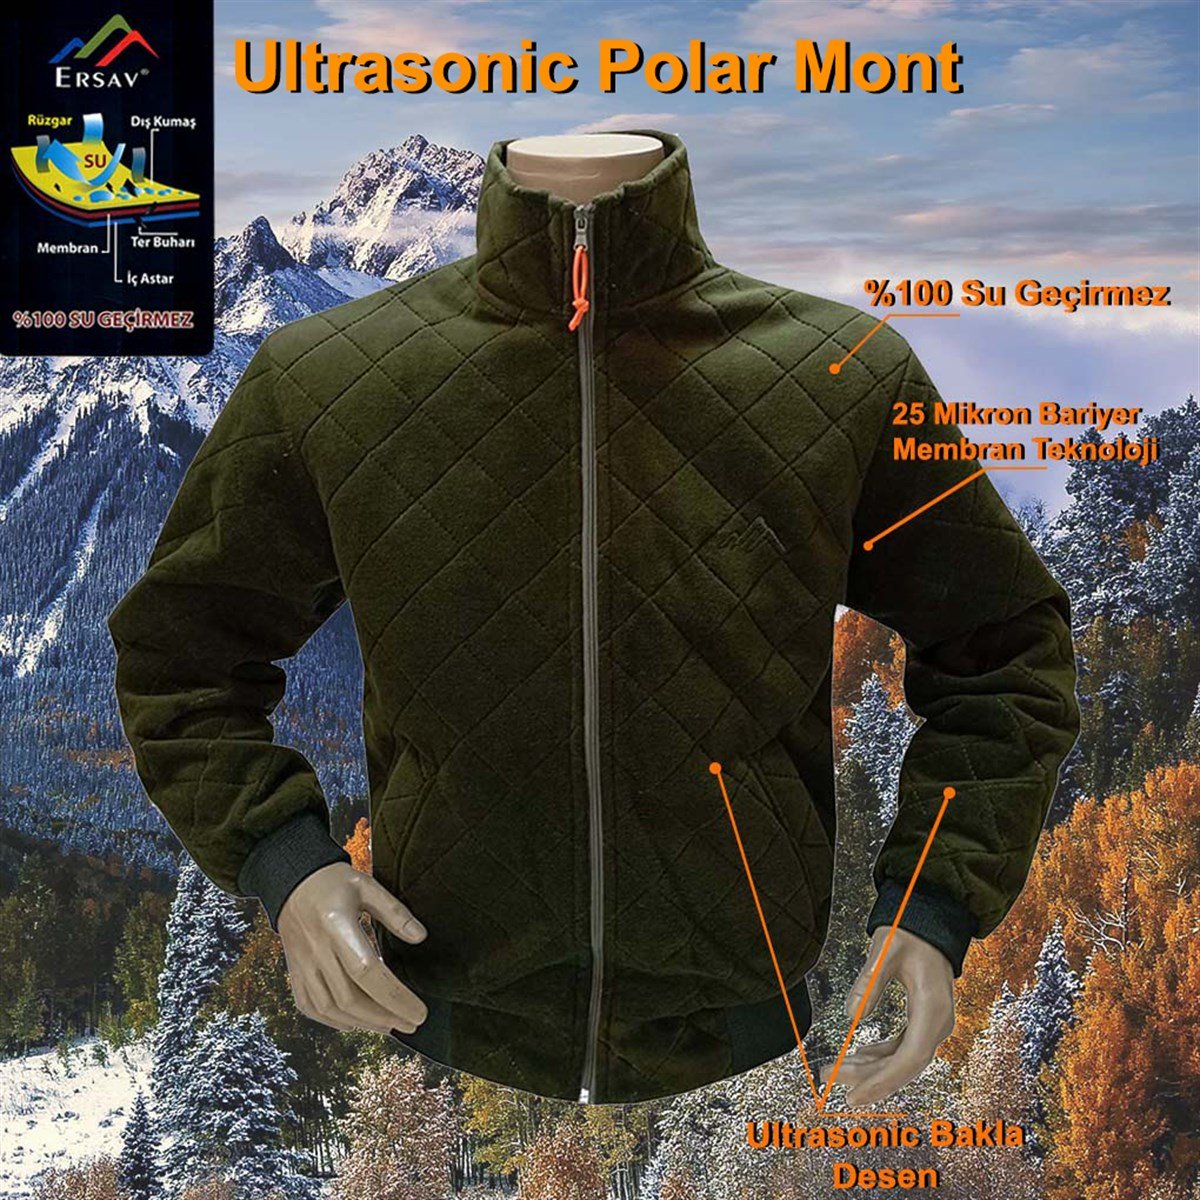 Polar Mont Ultrasonic Haki Erkek - Polis Sepeti